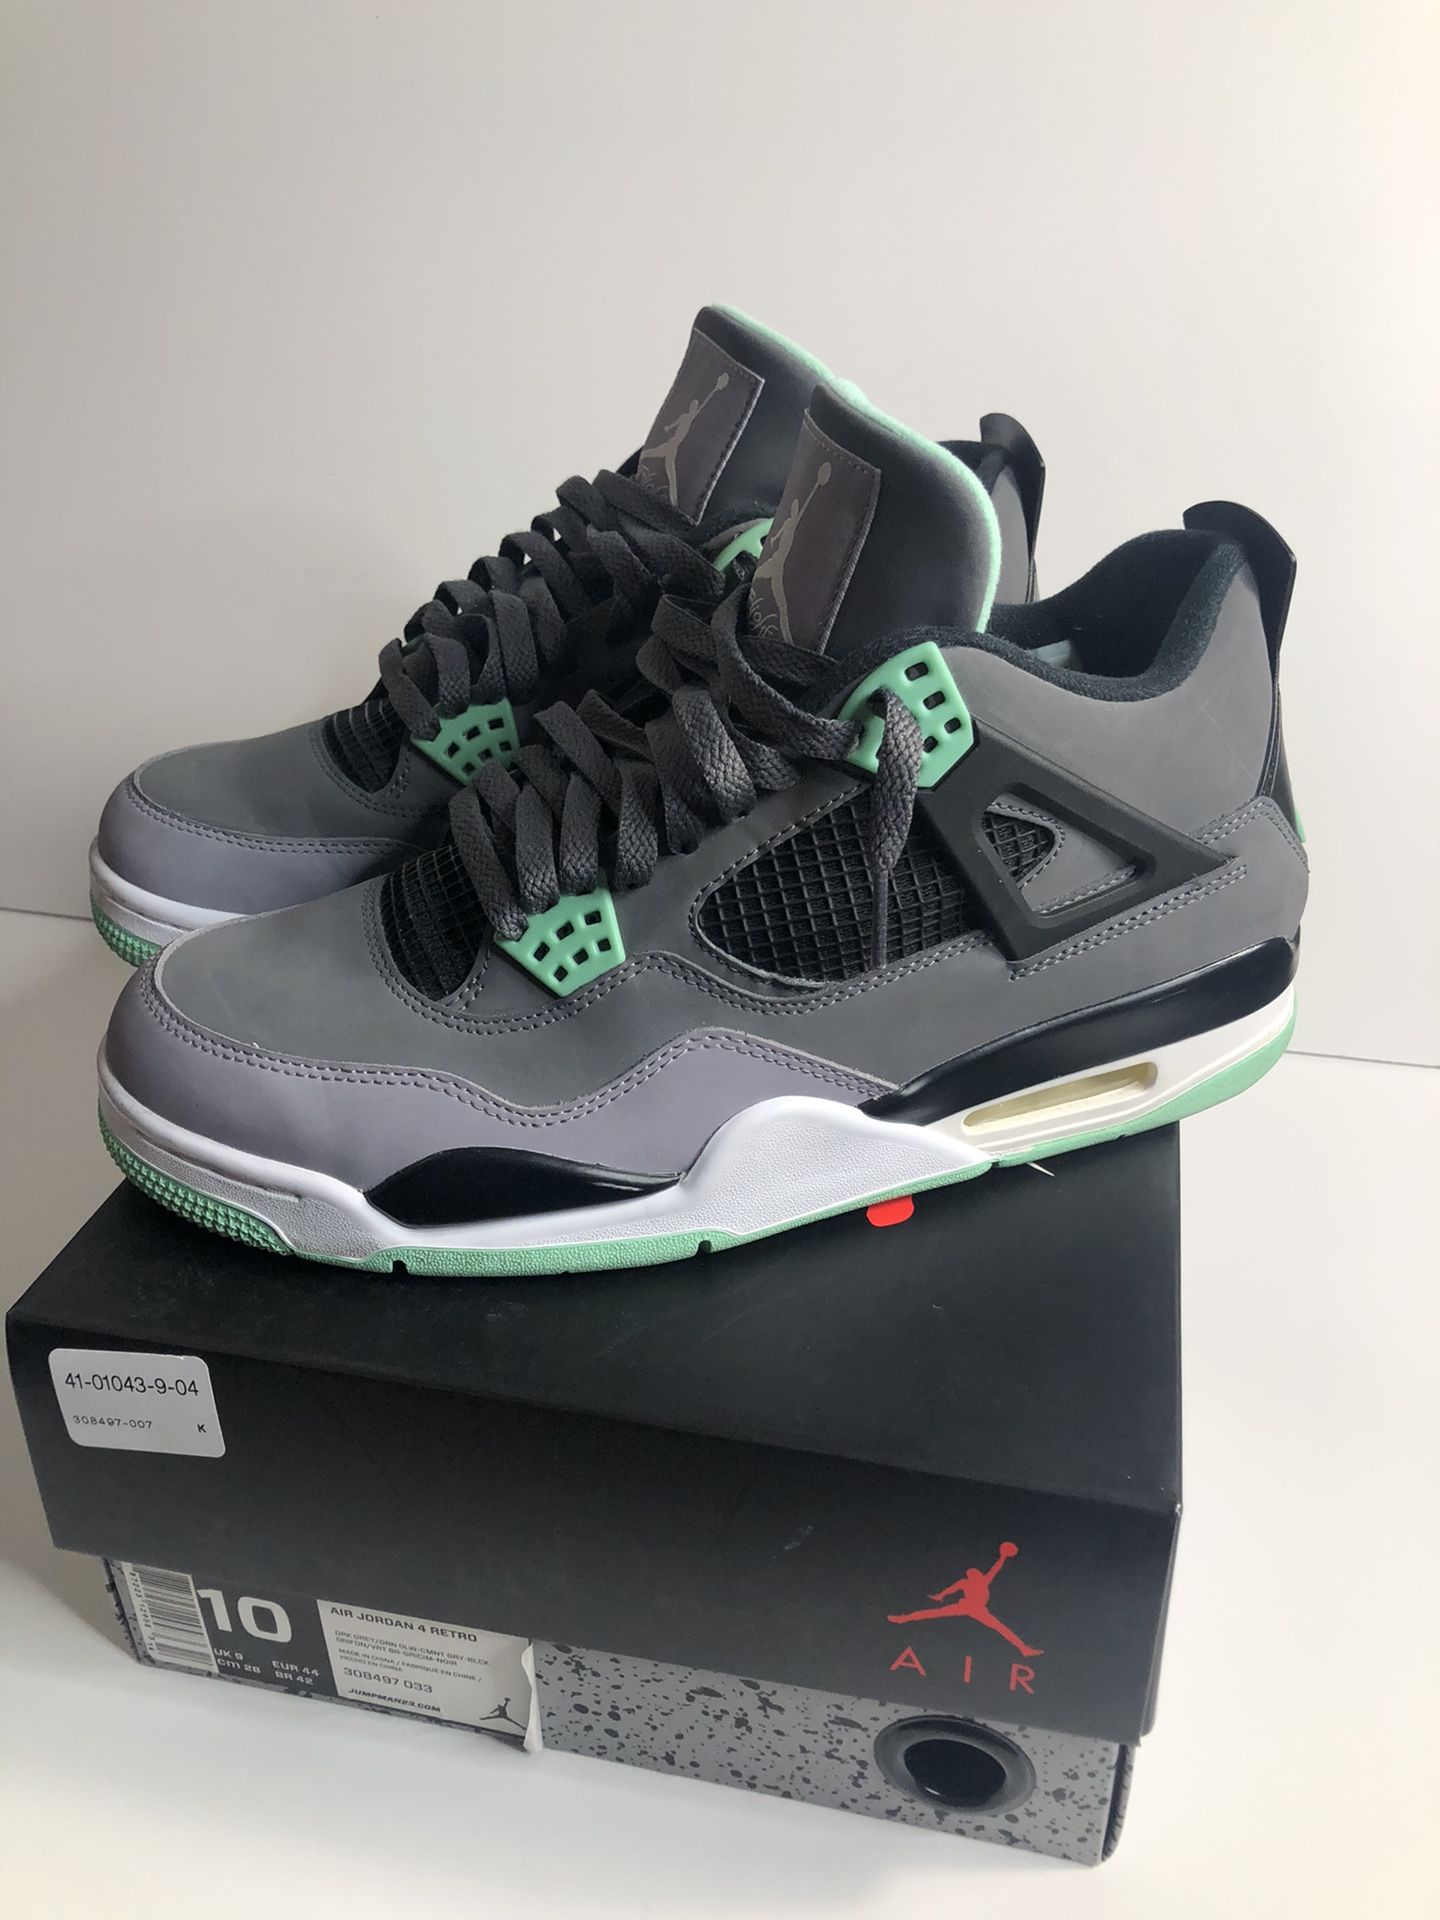 Nike air Jordan green glow 4 size 10 good condition og all